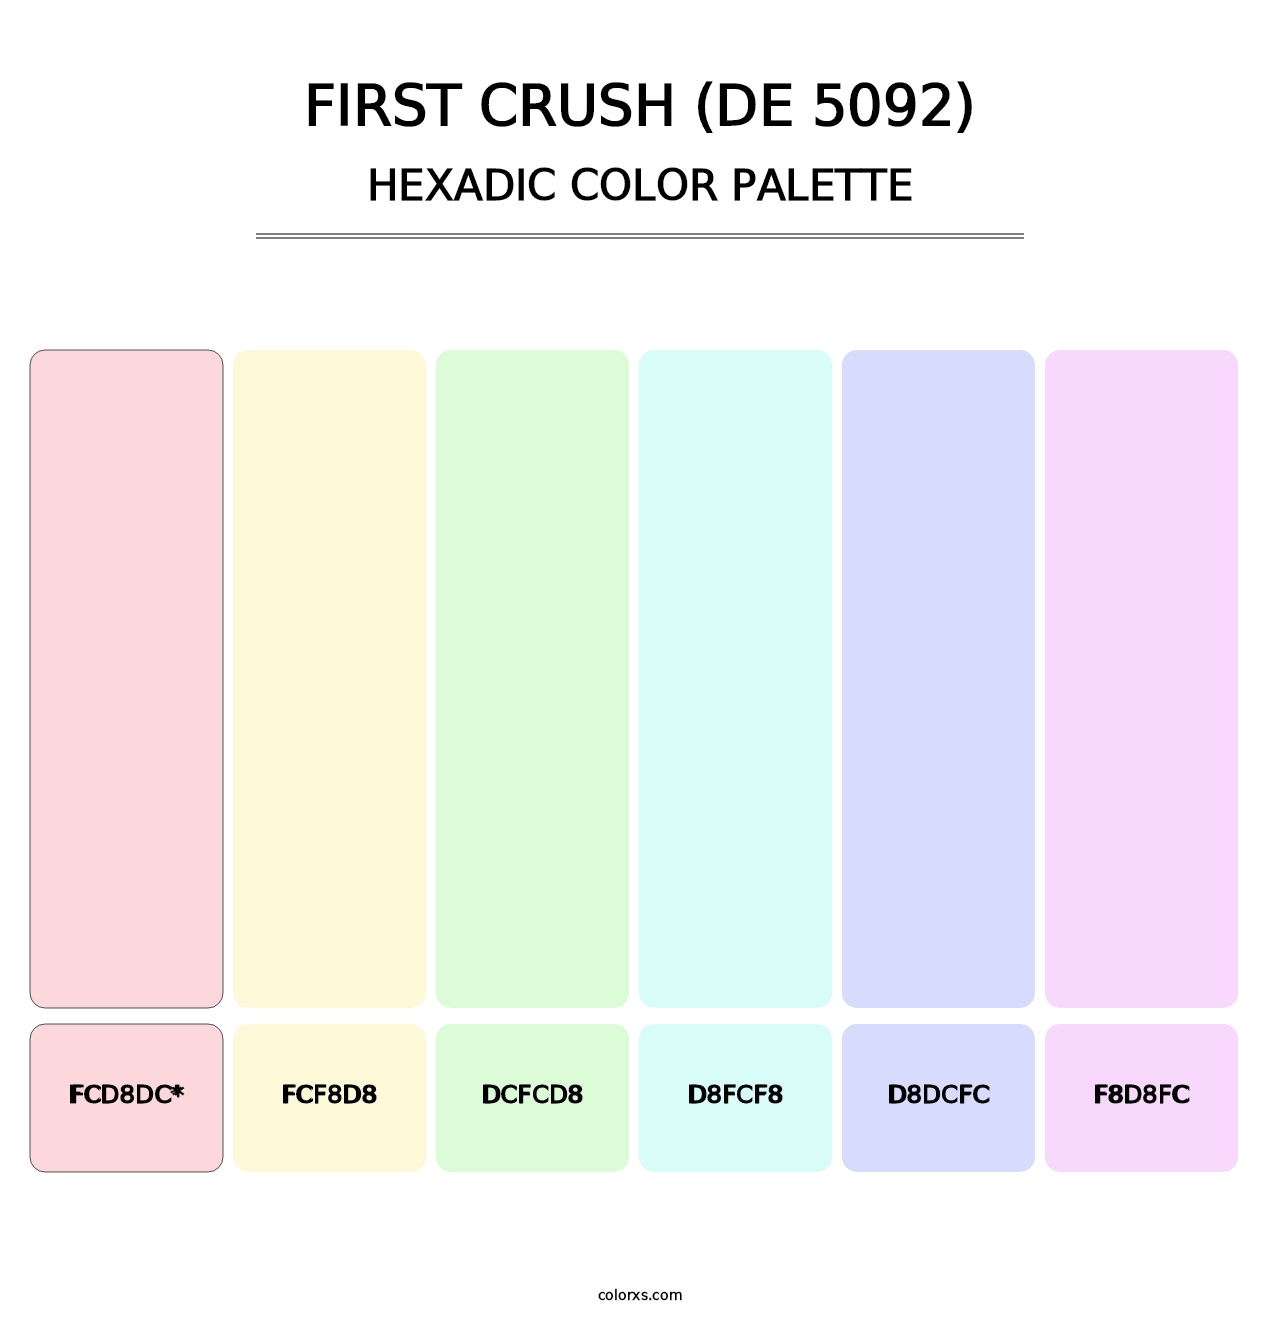 First Crush (DE 5092) - Hexadic Color Palette